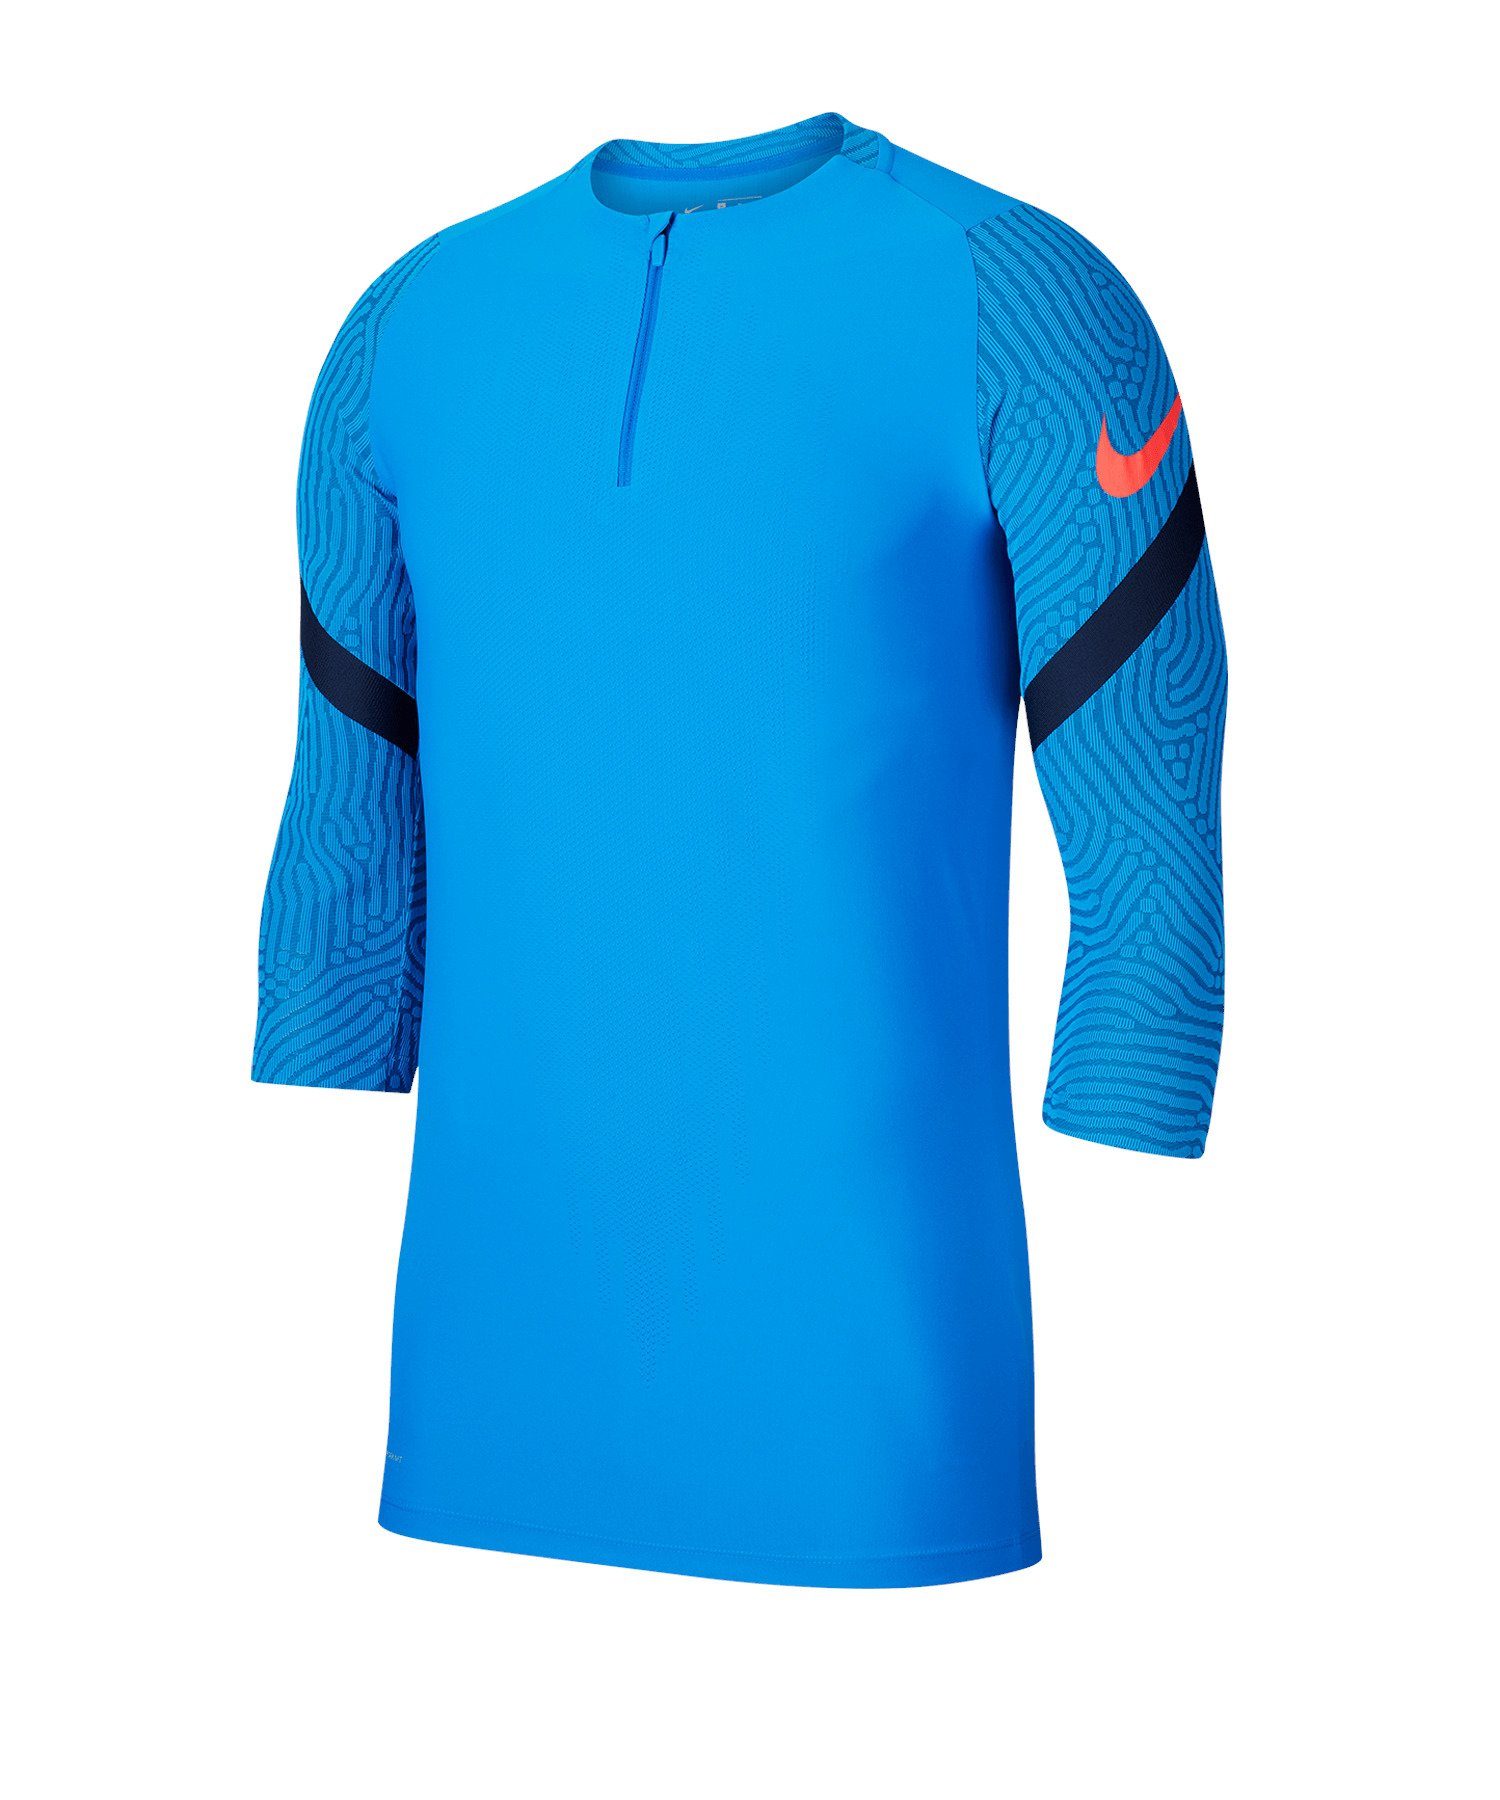 Nike Sweatshirt Strike Top Drill 1/4 Zip LS Vaporknit